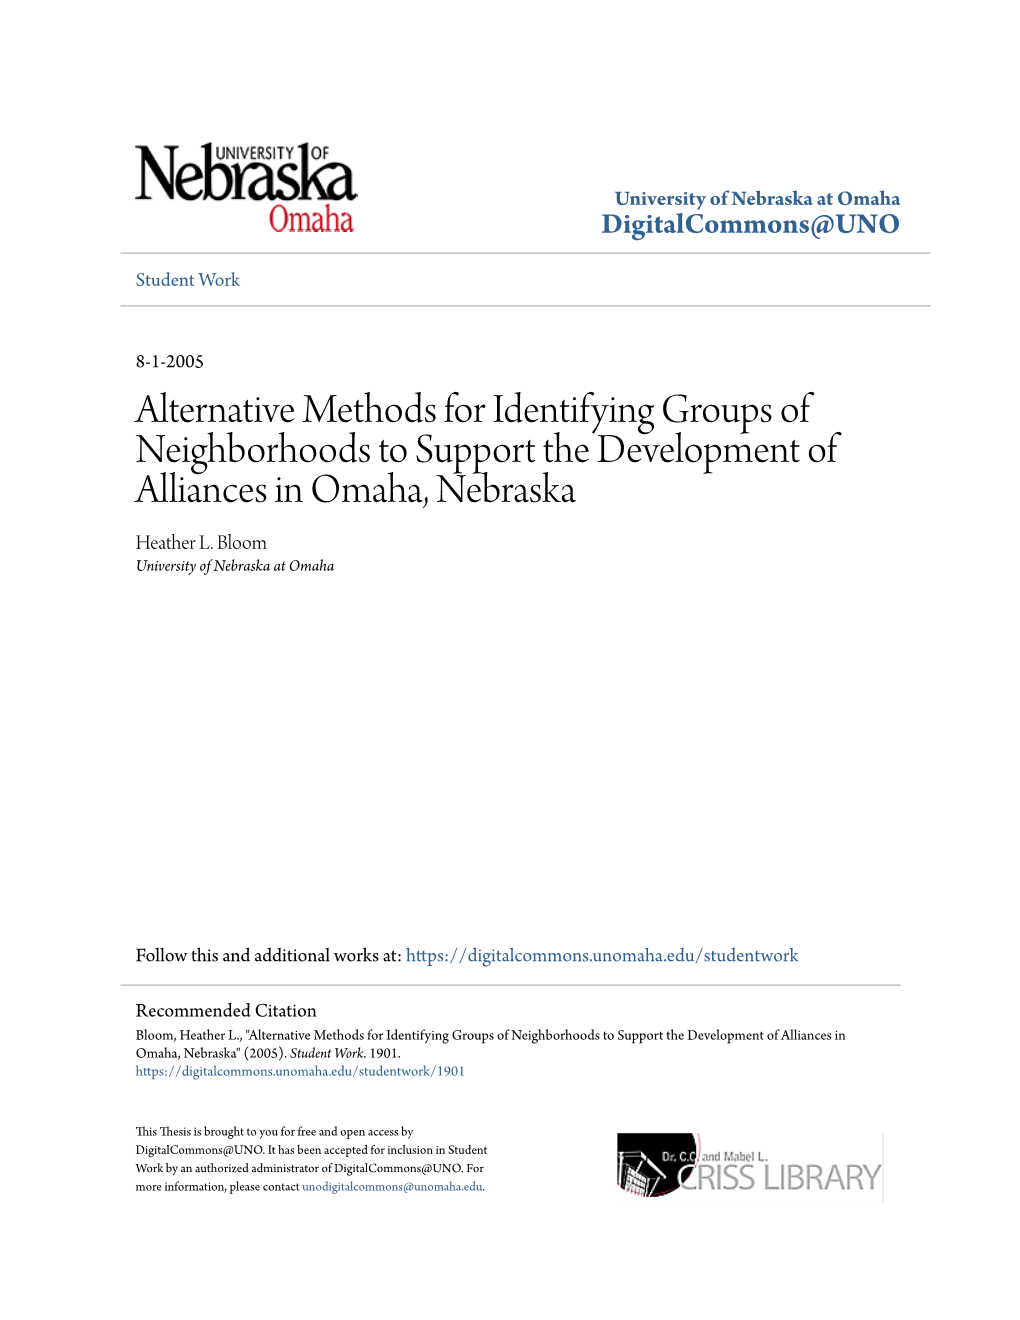 Alternative Methods for Identifying Groups of Neighborhoods to Support the Development of Alliances in Omaha, Nebraska Heather L